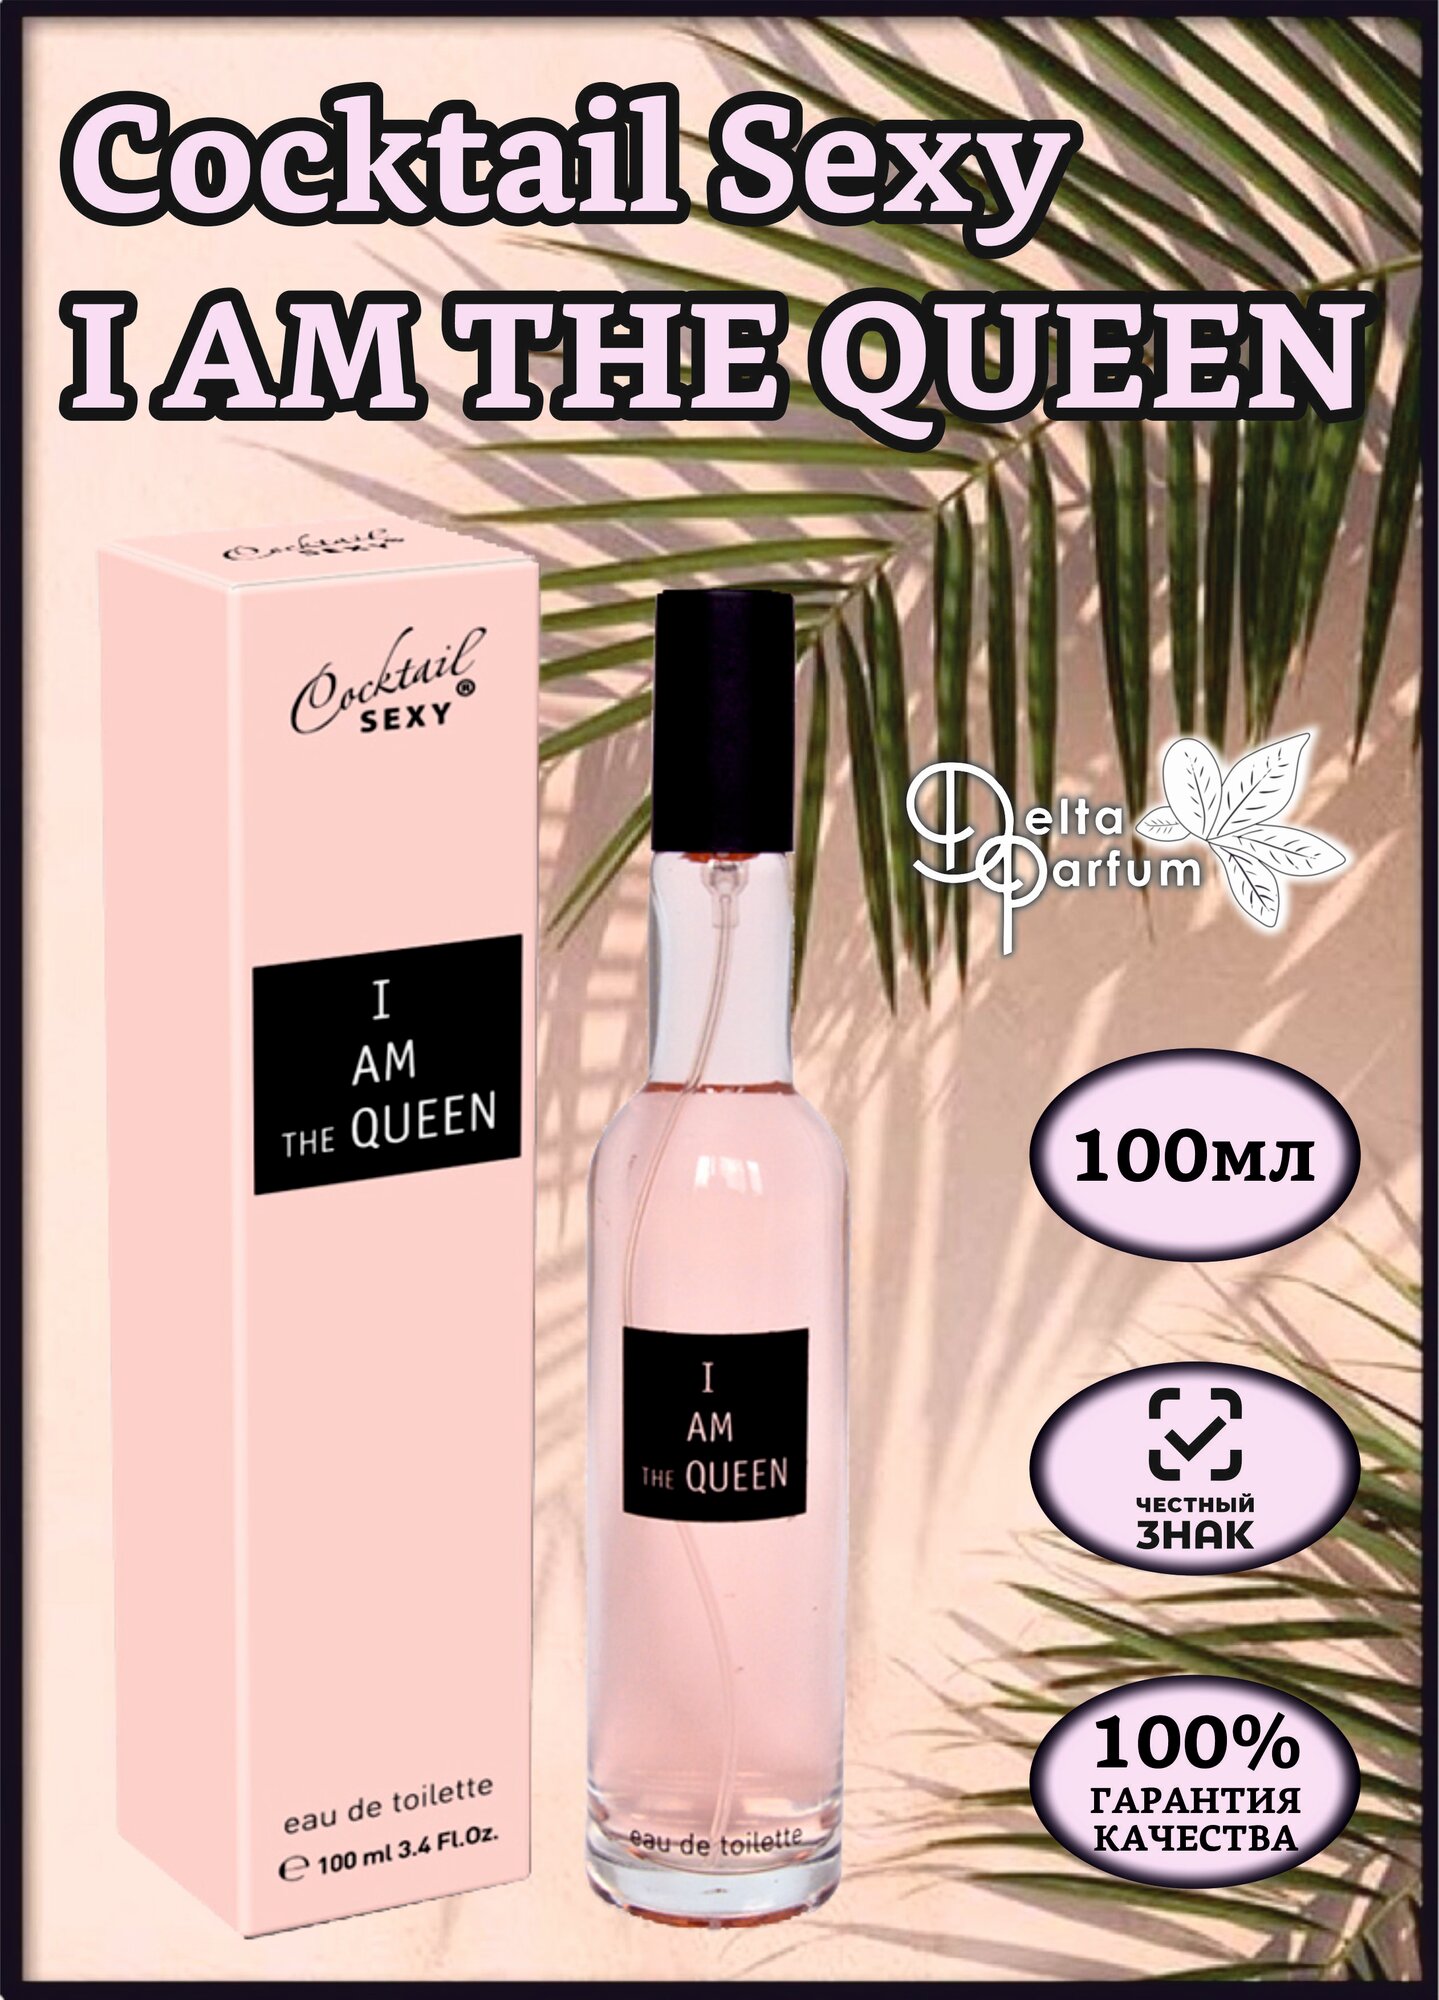 TODAY PARFUM (Delta parfum) Туалетная вода женская COCKTAIL SEXY I AM THE QUEEN